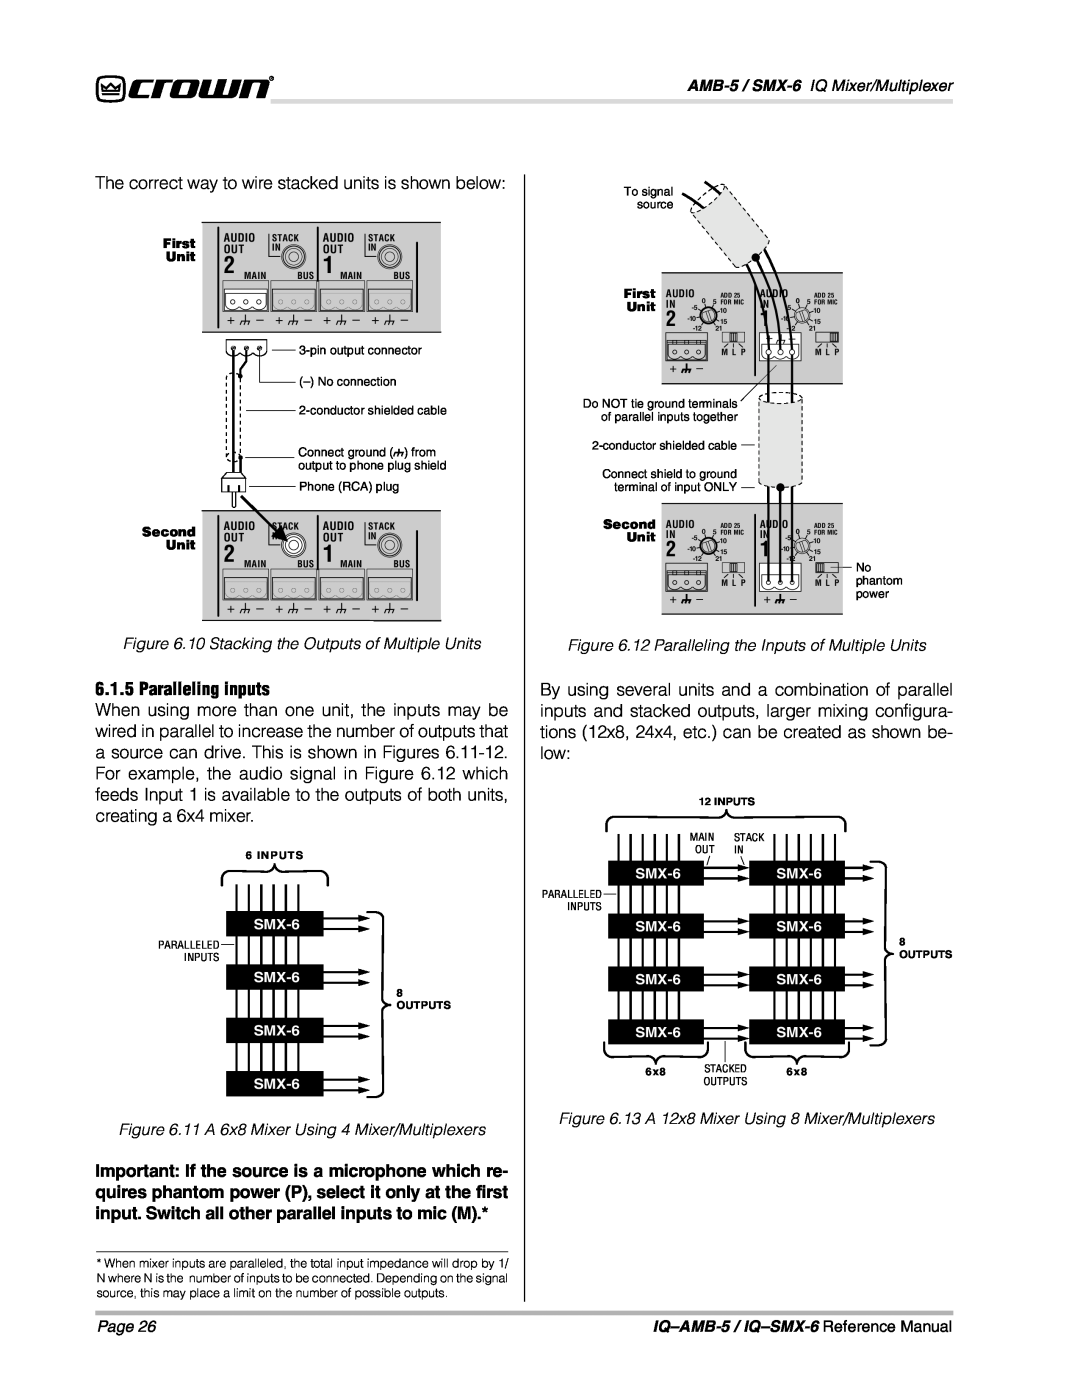 Crown IQSMX-6, IQAMB-5 manual Paralleling inputs, AMB-5 / SMX-6 IQ Mixer/Multiplexer 